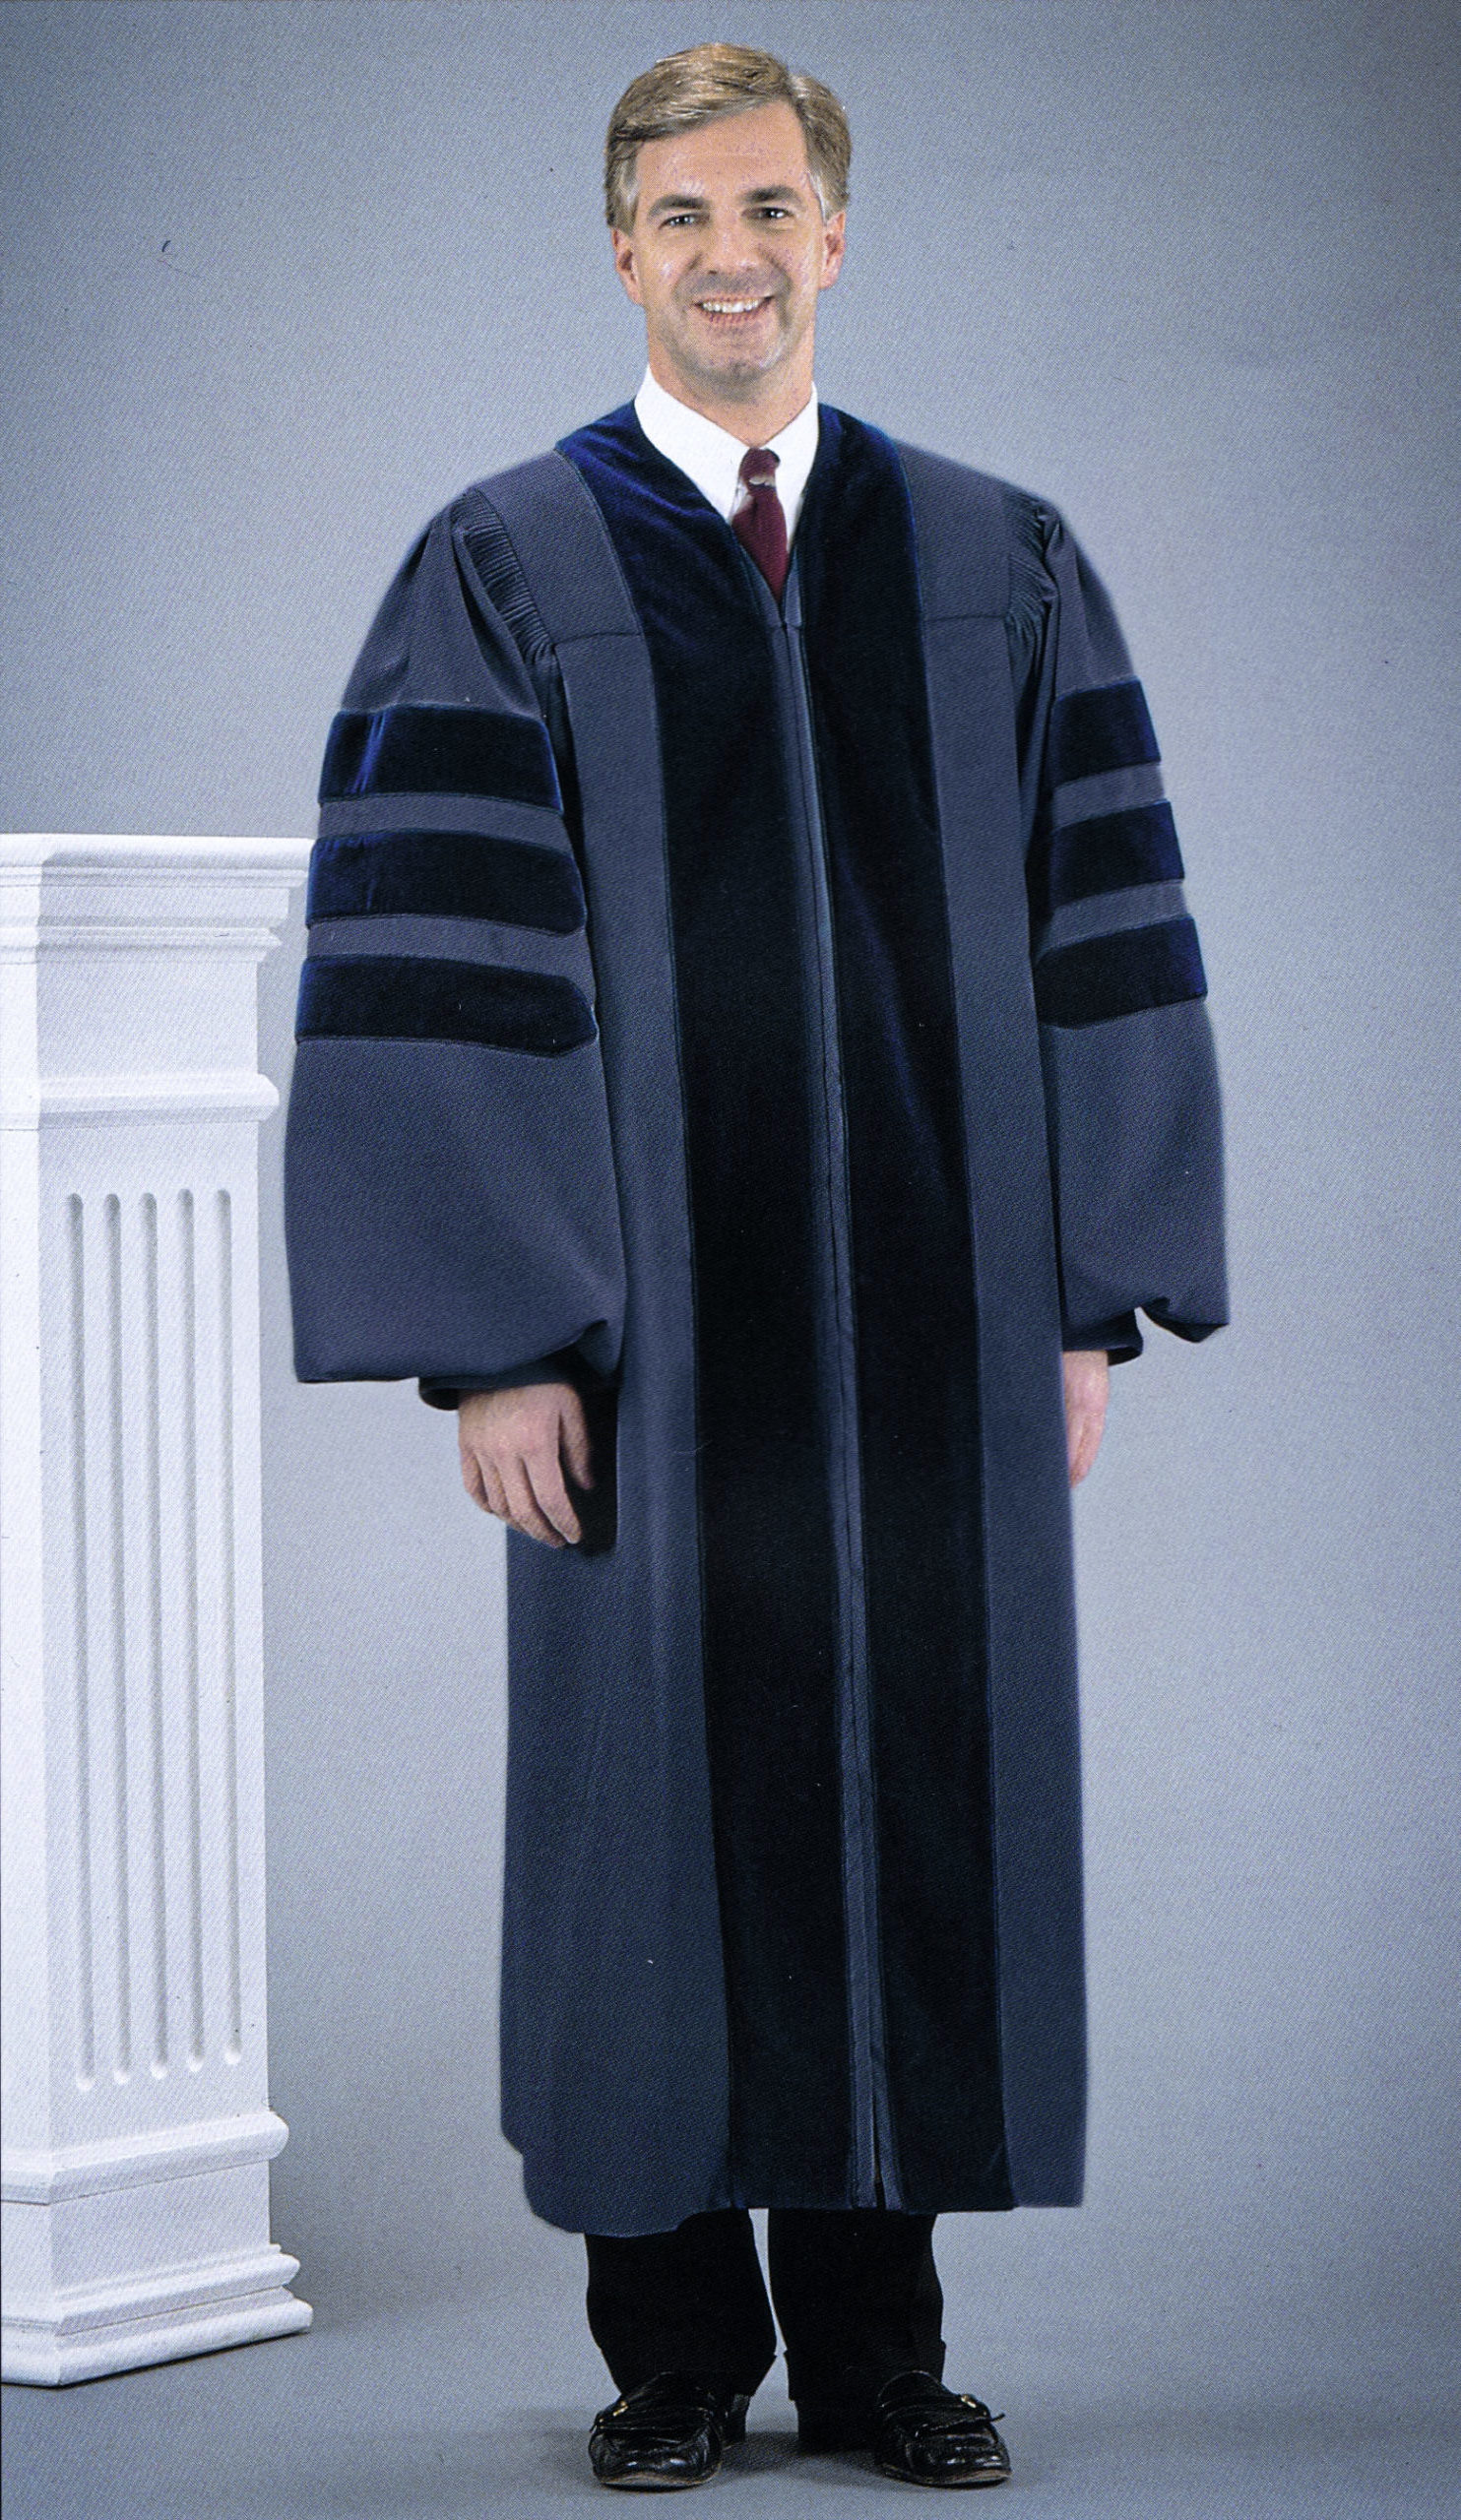 kcl phd graduation gown